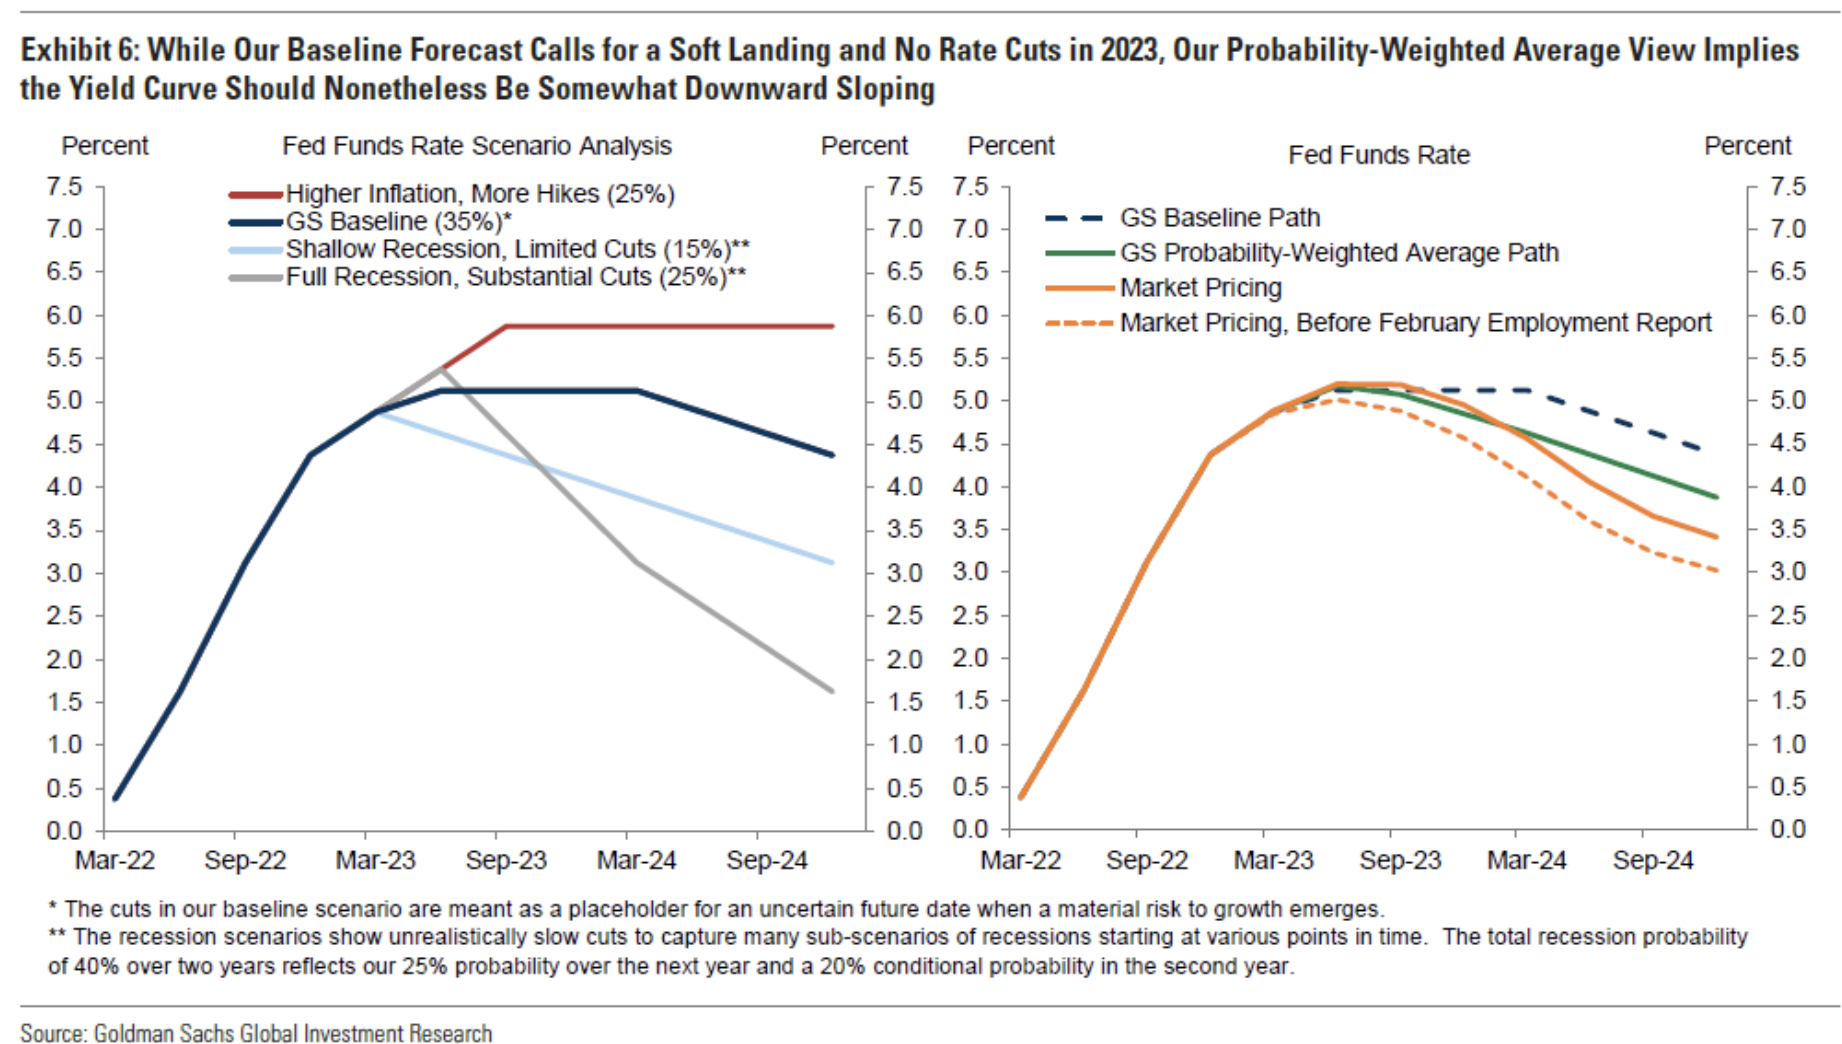 Szenarioanalyse der Fed Funds Rate